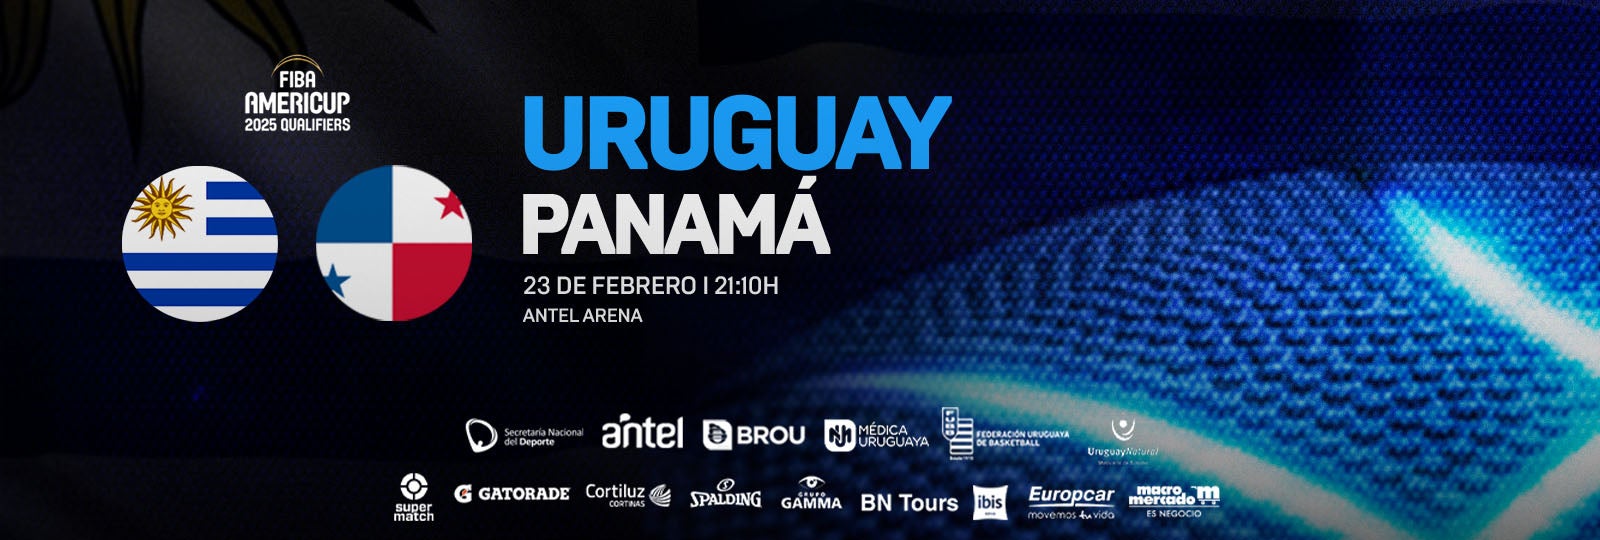 Uruguay vs Panamá Antel Arena